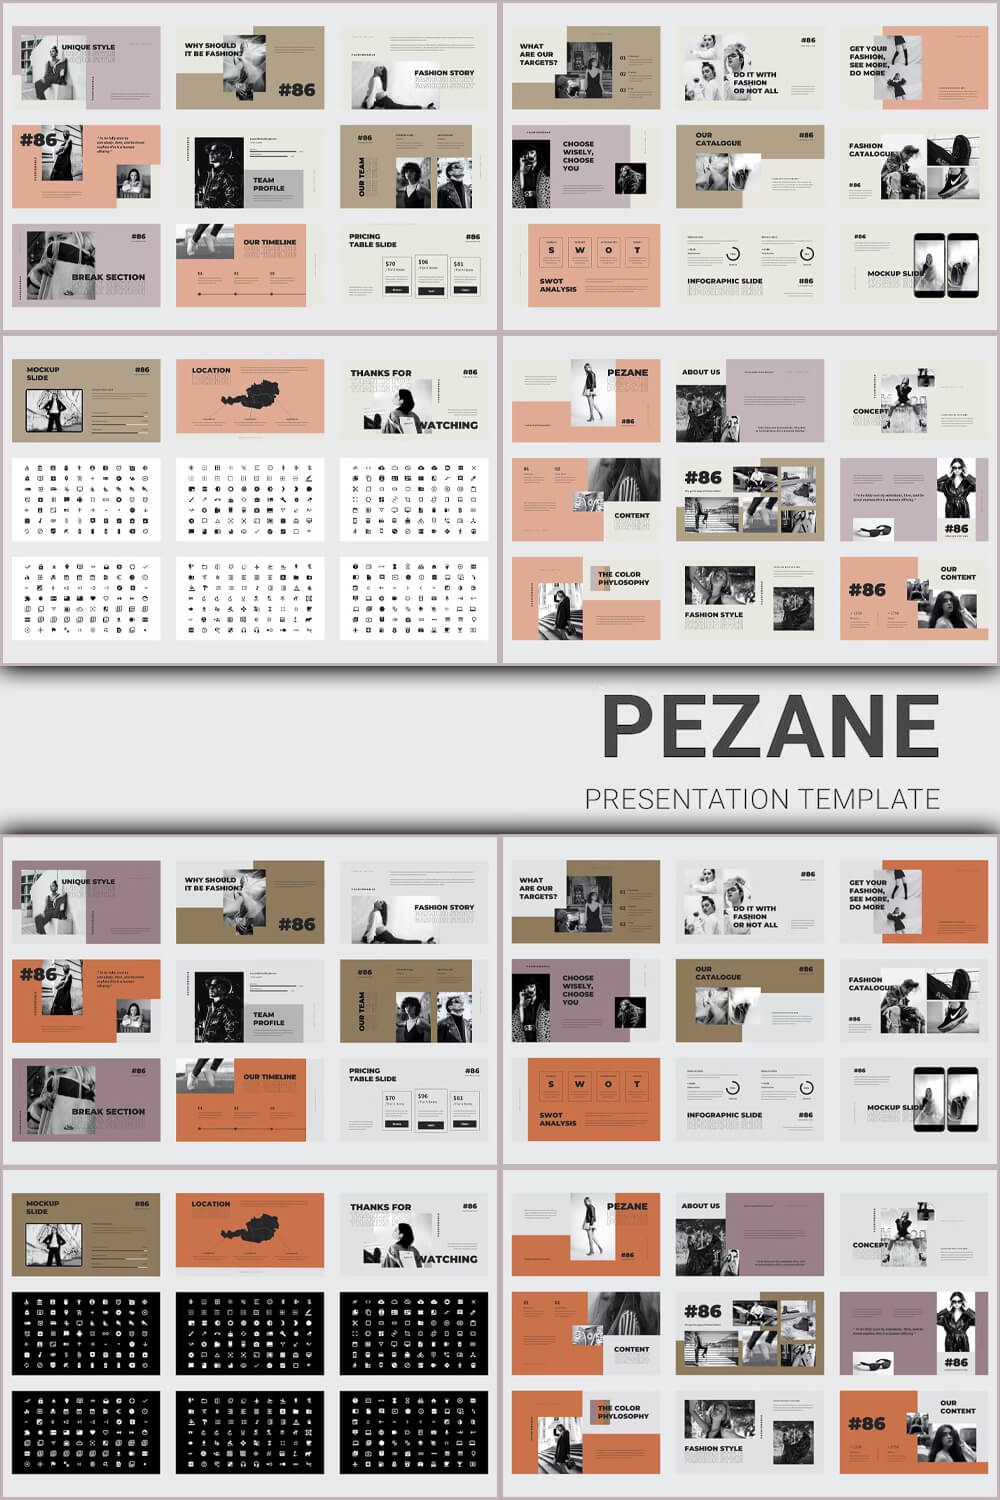 Team profile of Pezane presentation template.